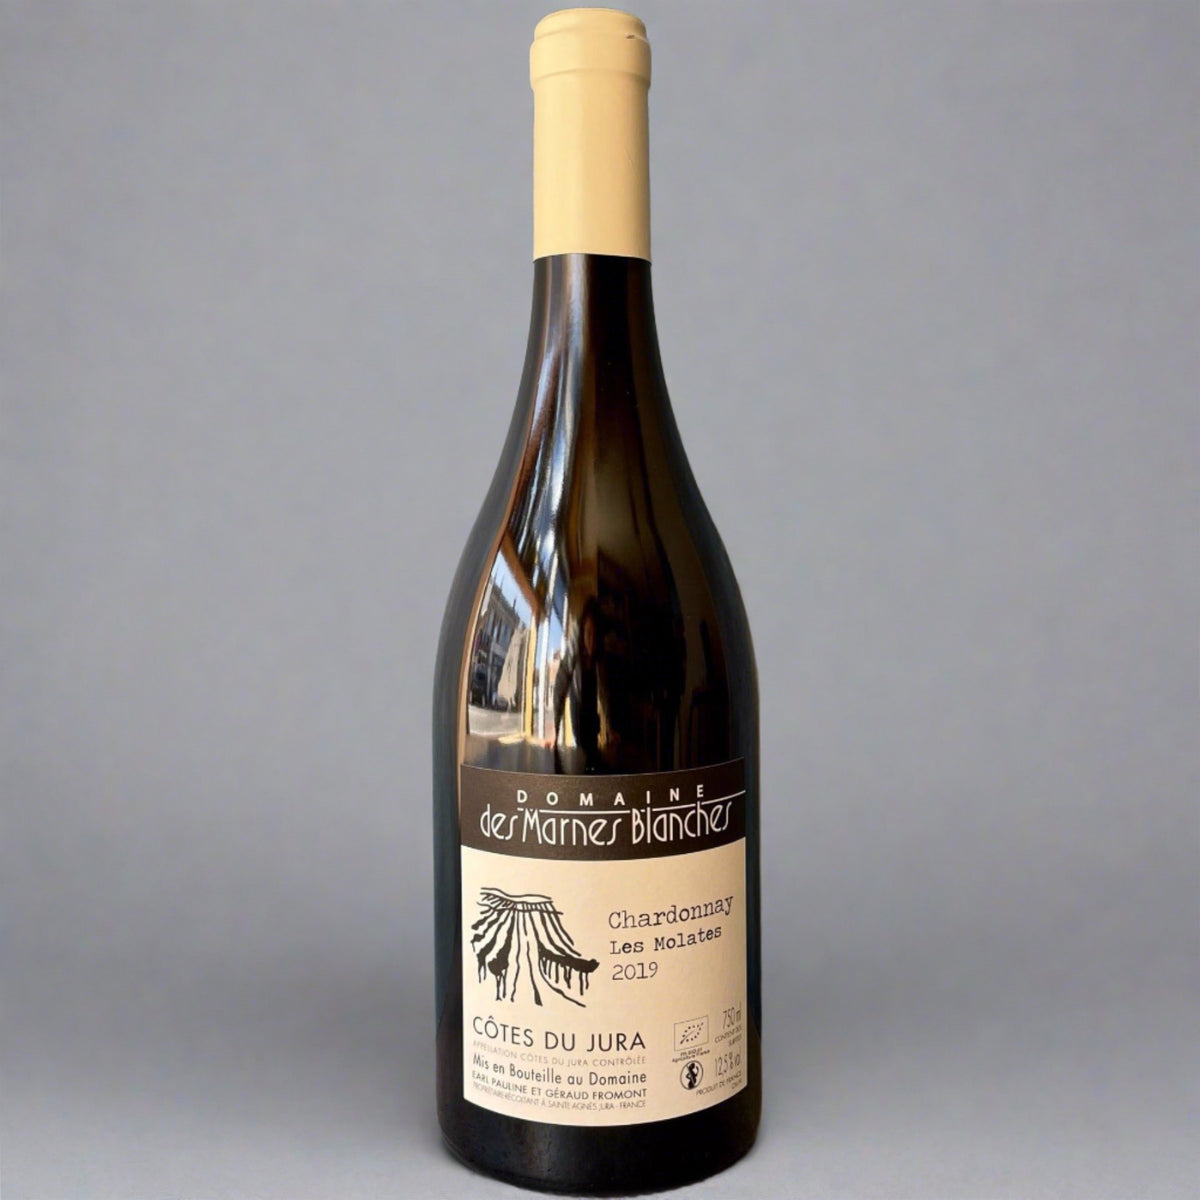 Domaine des Marnes Blanches, Les Molates Chardonnay